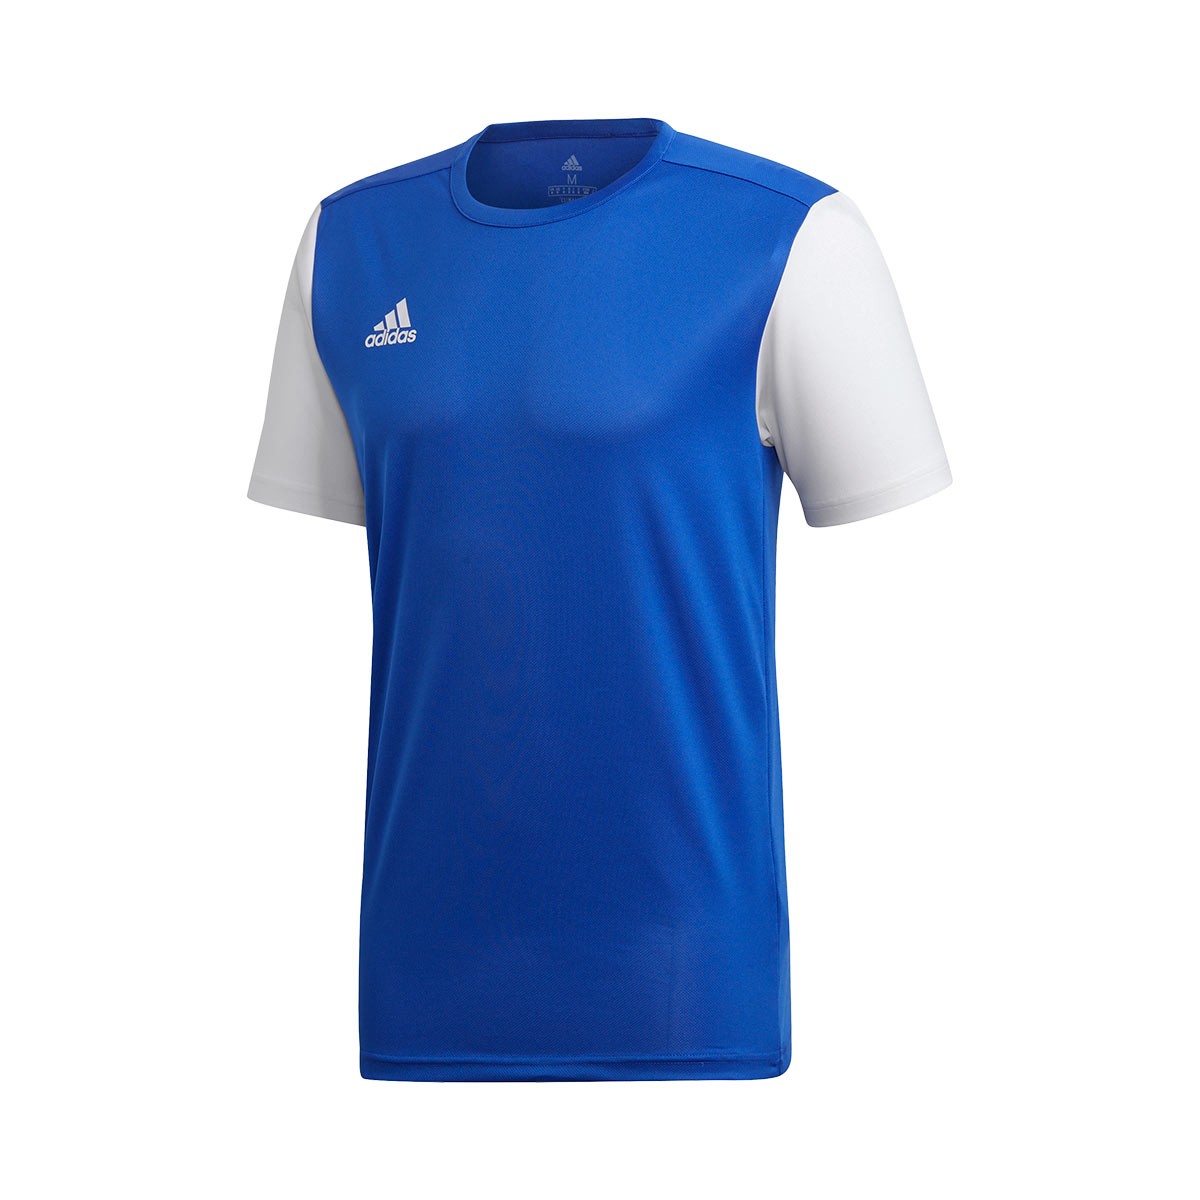 Camiseta adidas Estro 19 m/c Bold blue-White - Tienda de fútbol Fútbol  Emotion